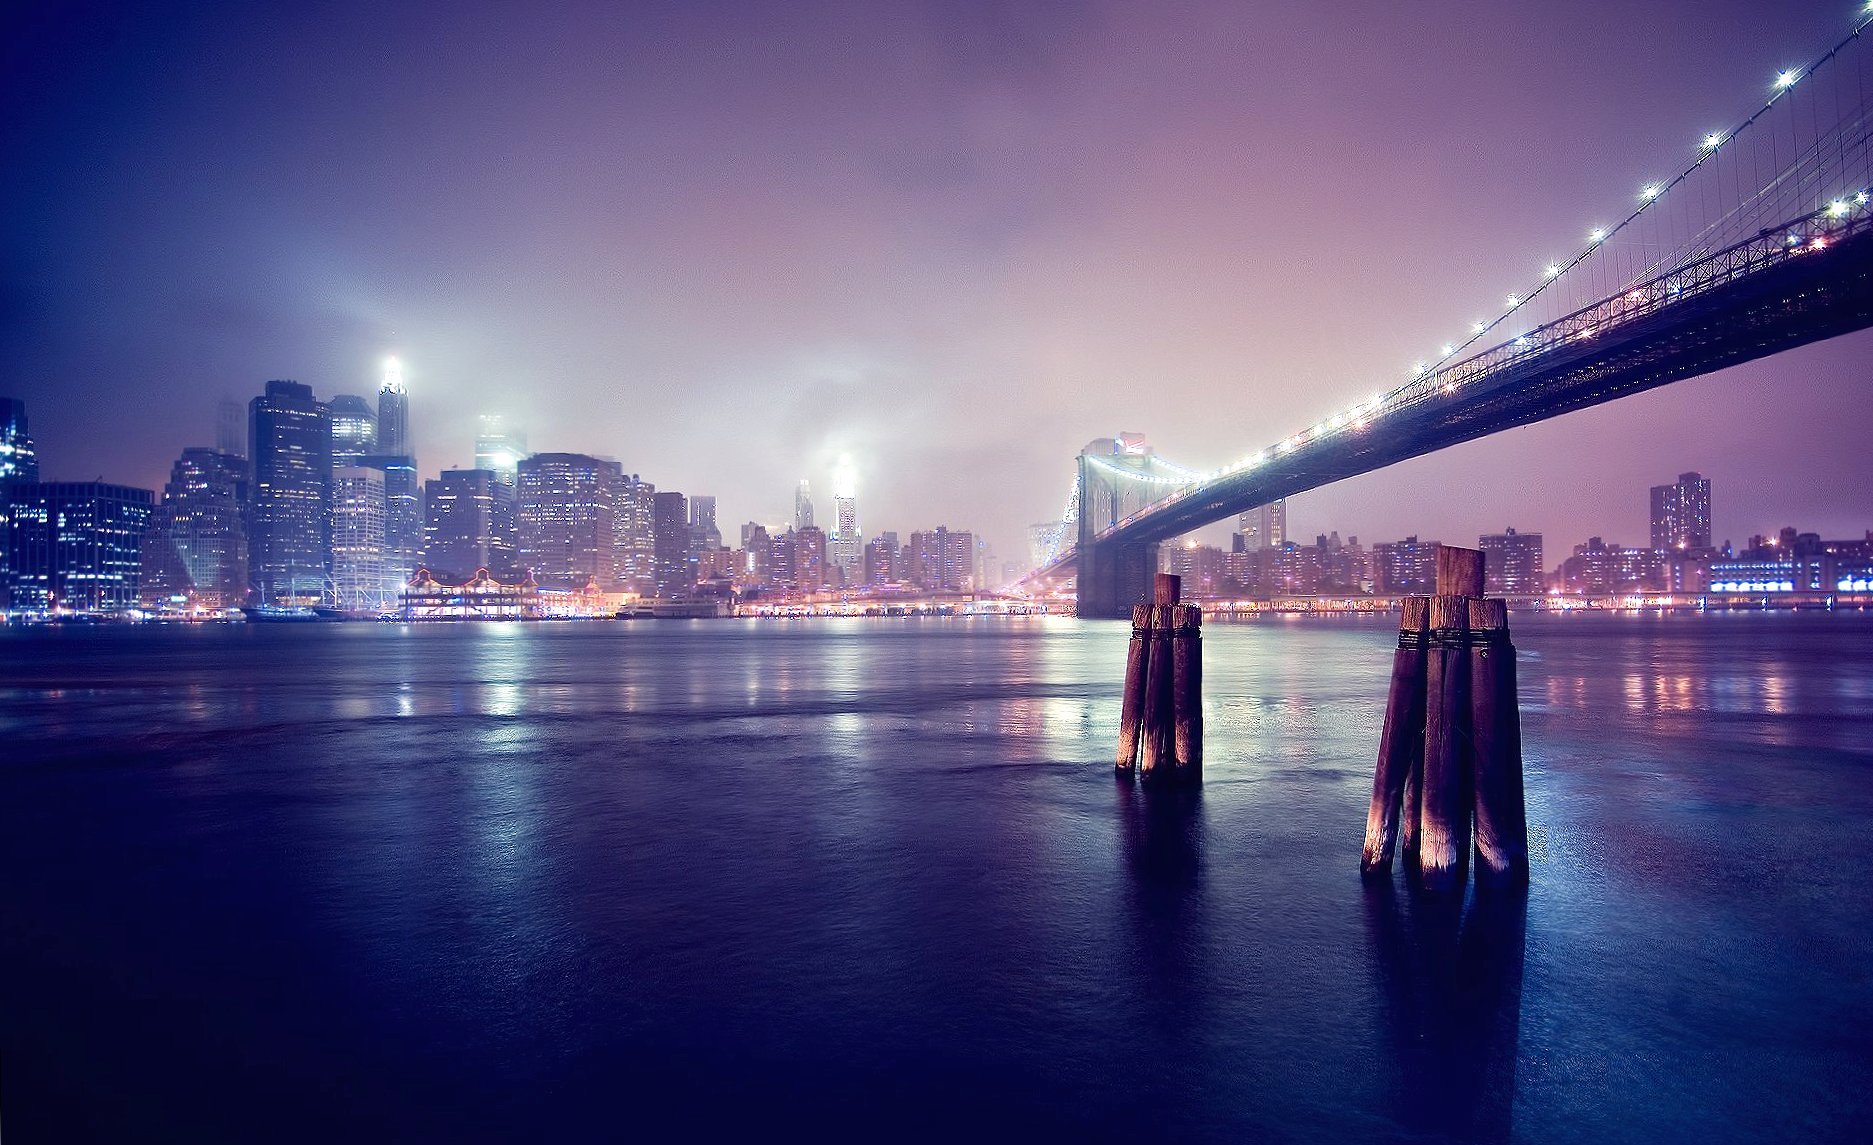 Night brooklyn bridge new york at 1024 x 768 size wallpapers HD quality